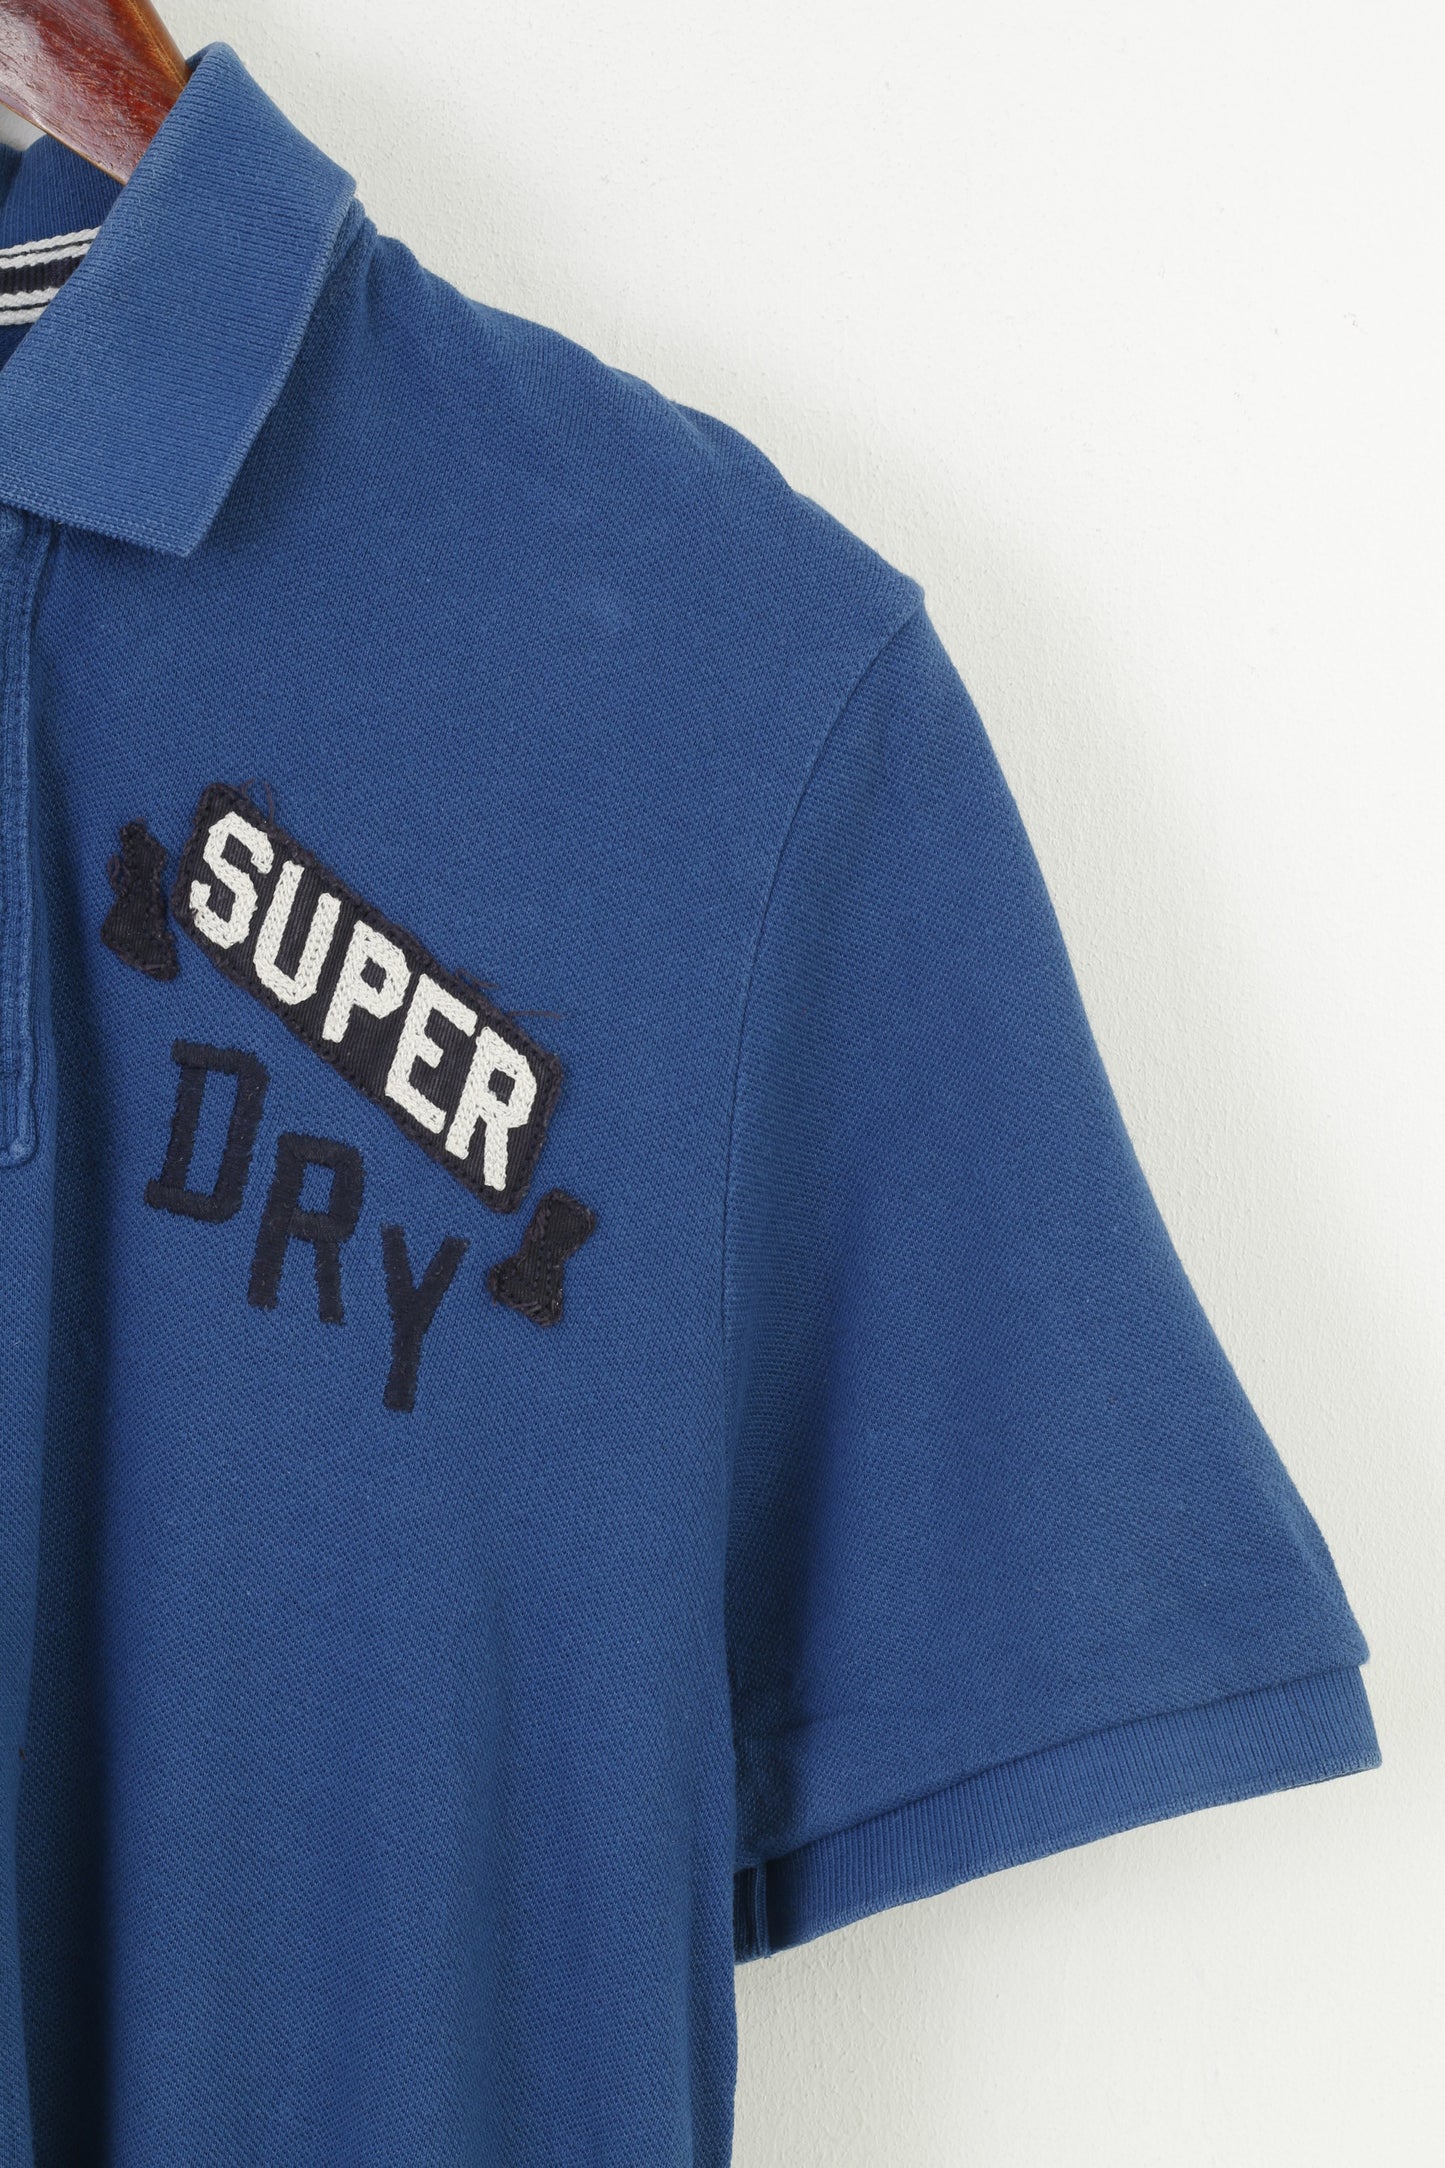 Superdry Men M Polo Shirt Navy Cotton Double Black Label Polo Fit Vintage Short Sleeve Top